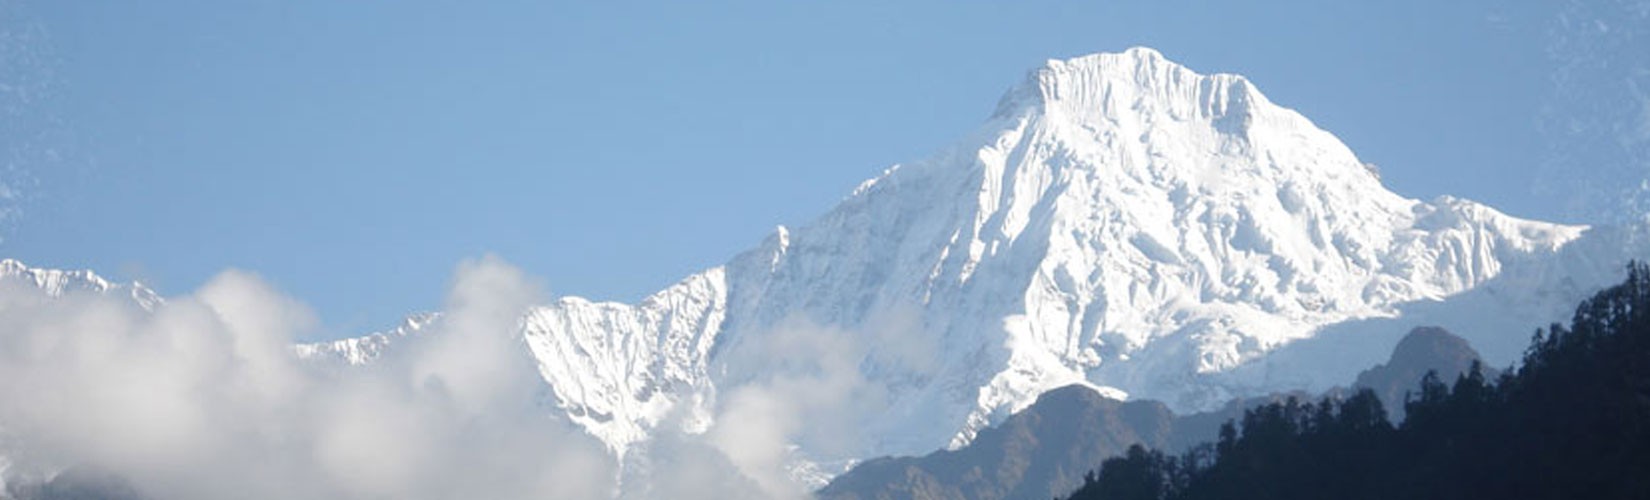 Ganesh Himal Pangsang La pass Trek